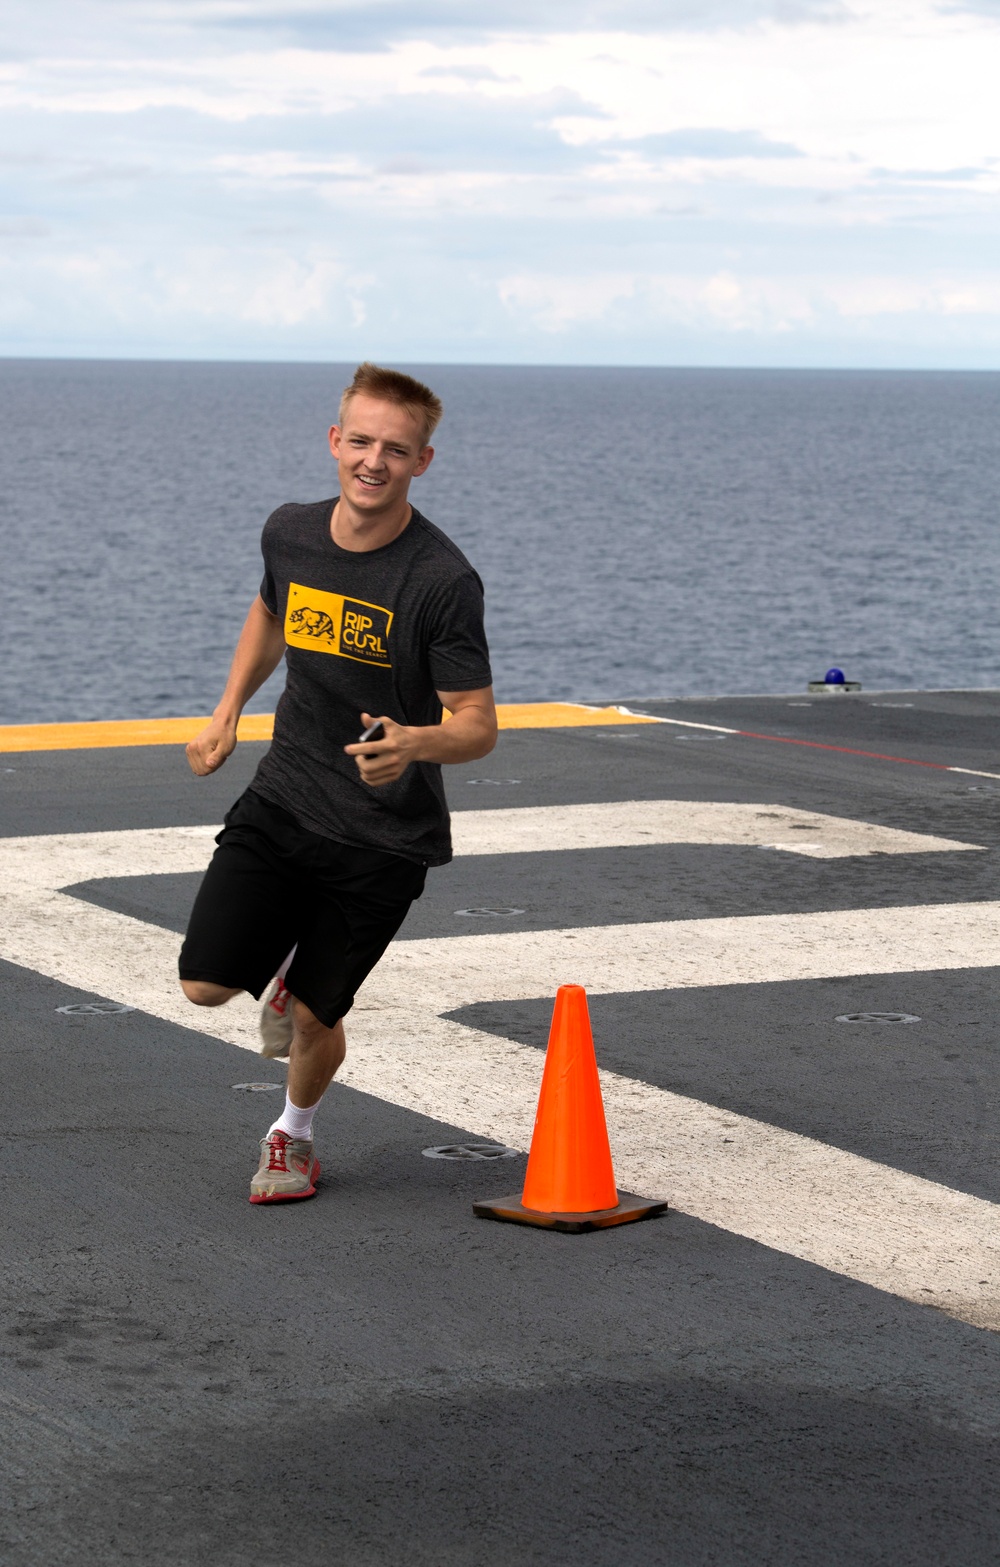 Fun Run on the deck of the USS Bonhomme Richard